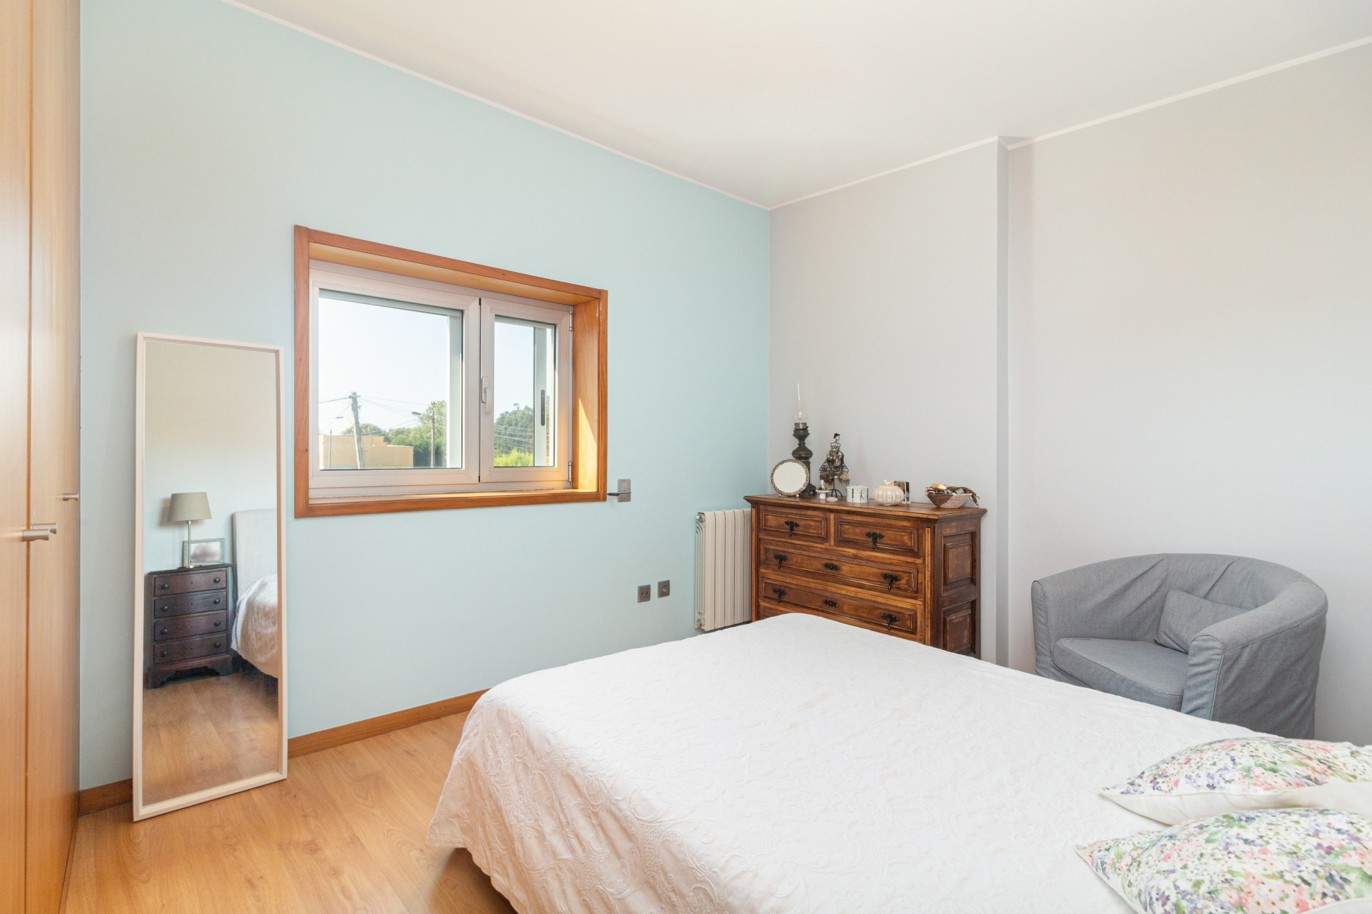 3 bedroom apartment with sea view, for sale, in Lavra, Matosinhos, Porto, Portugal_208223